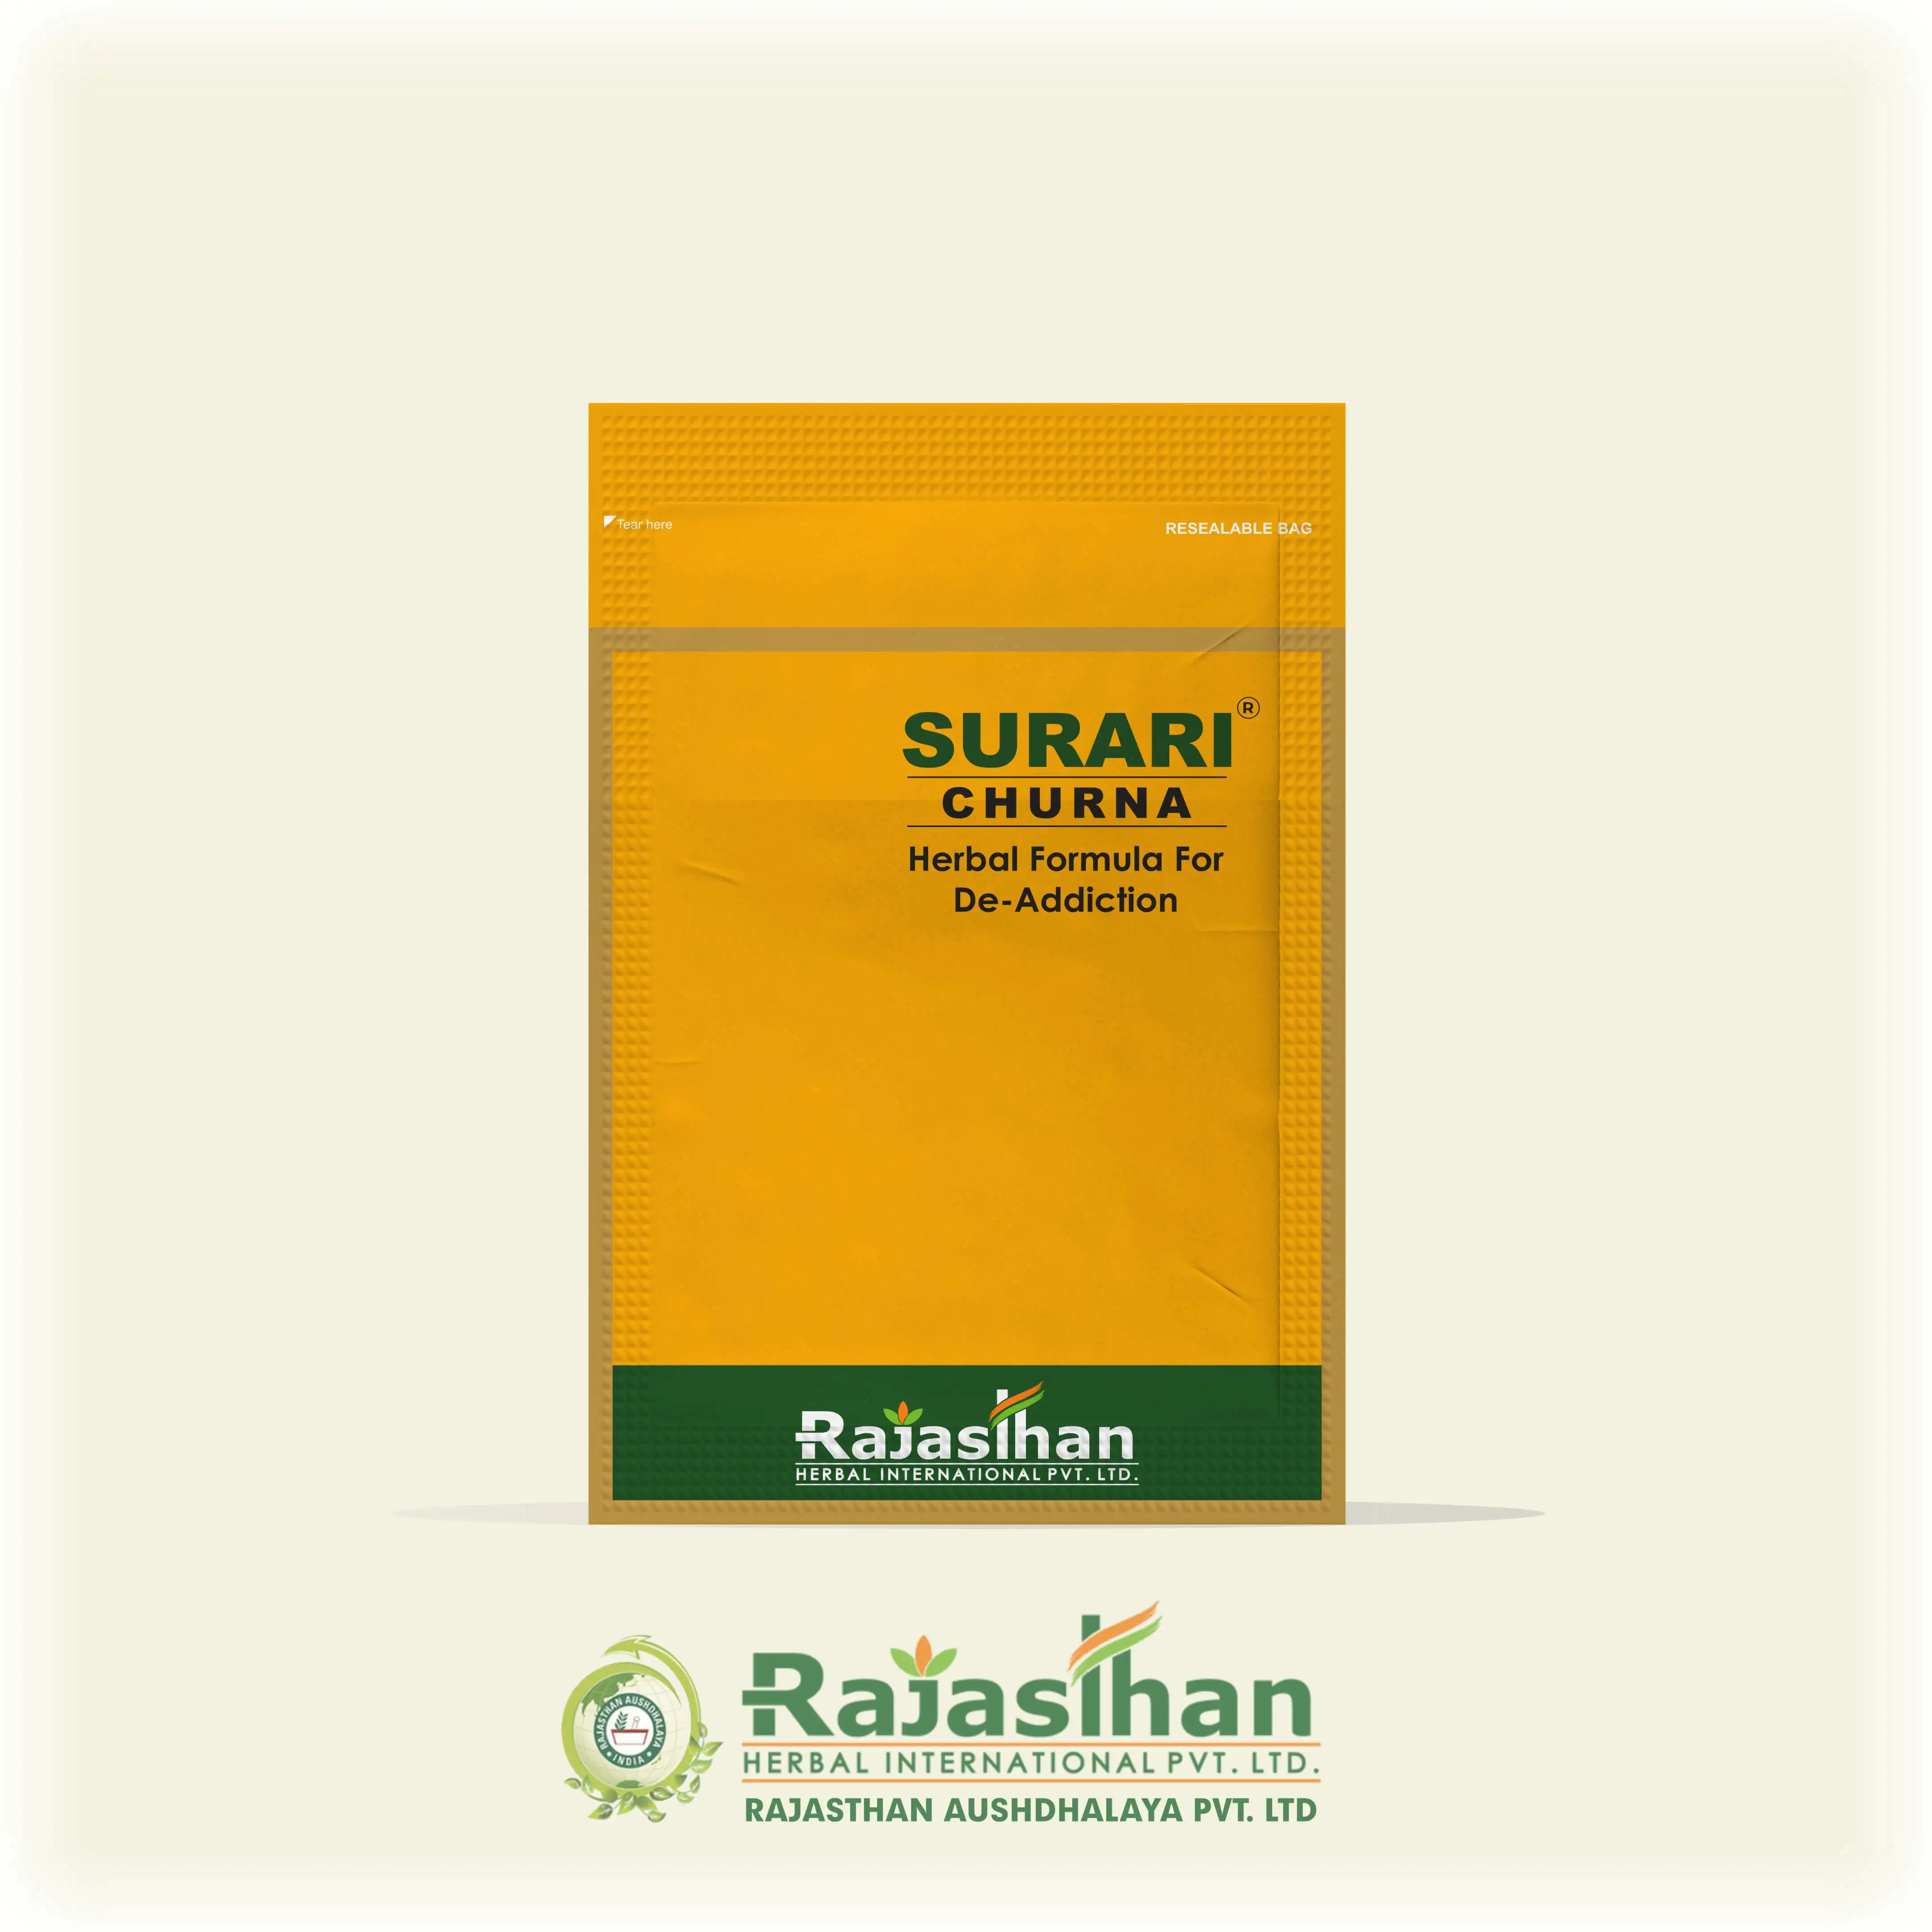 Rajasthan Herbals Surari Churna